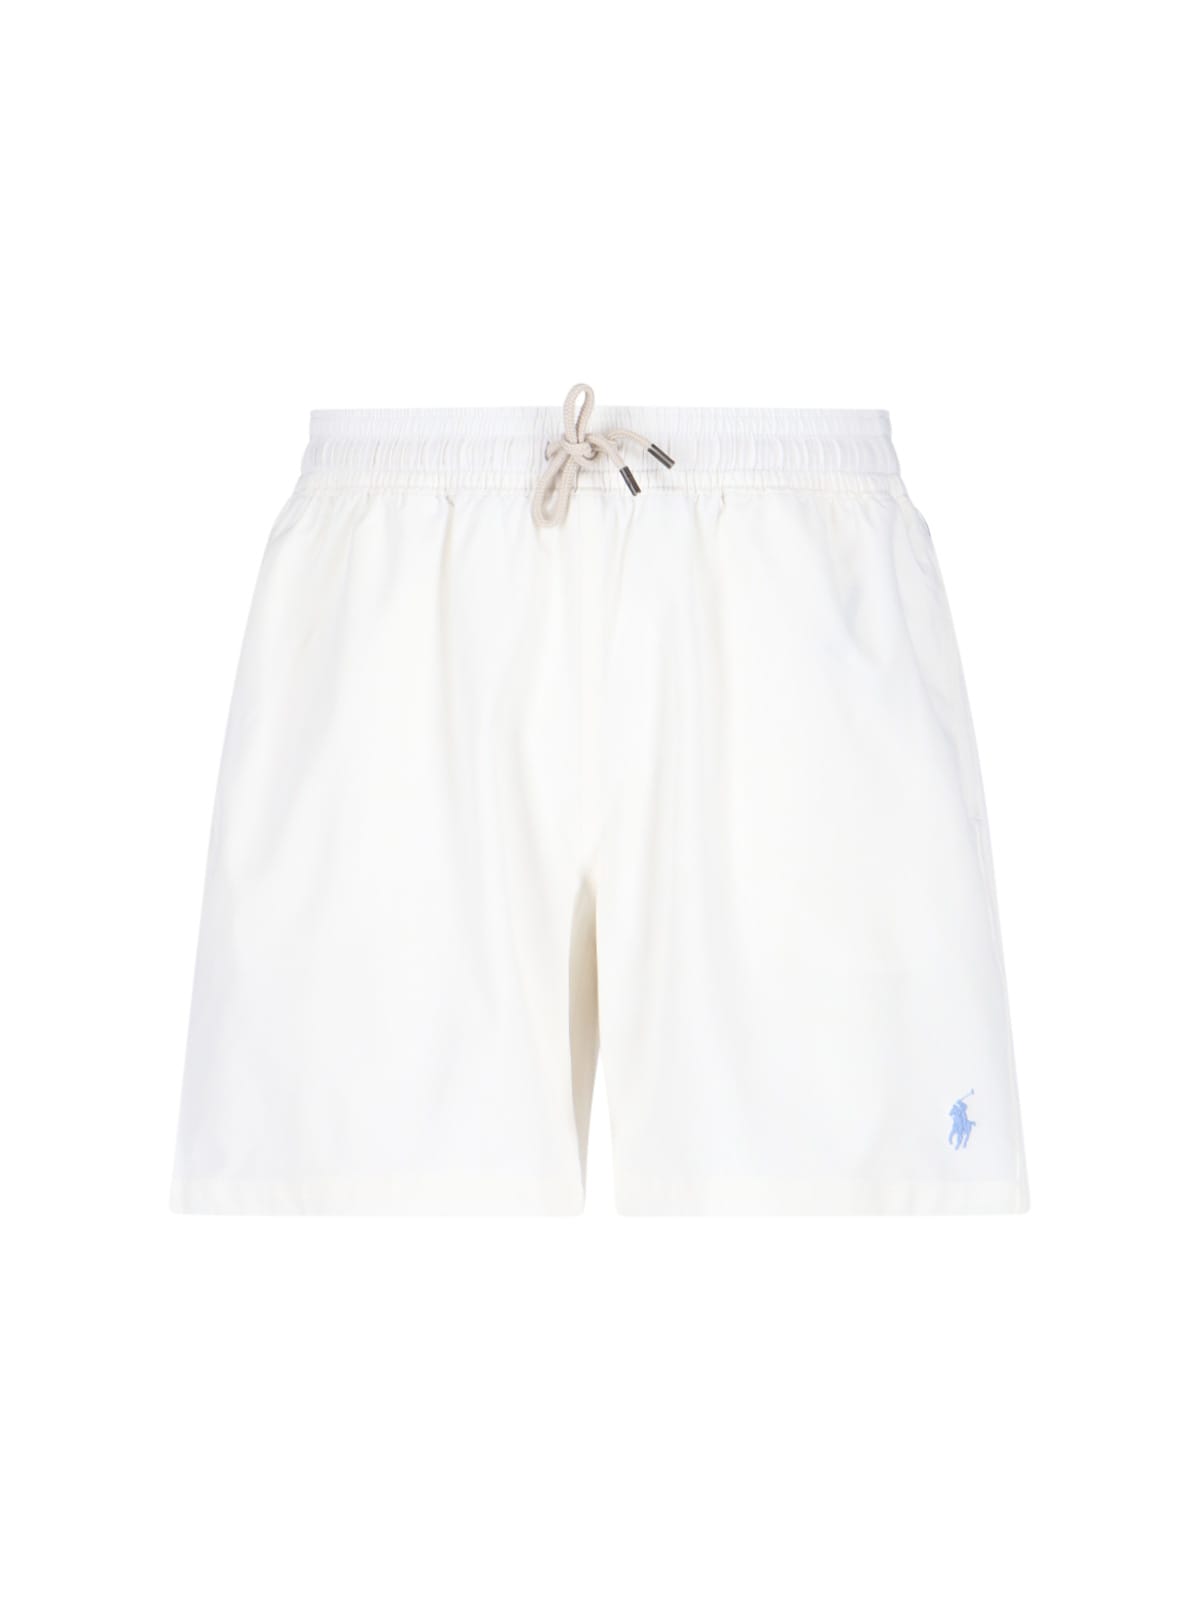 Ralph Lauren Swimwear In White